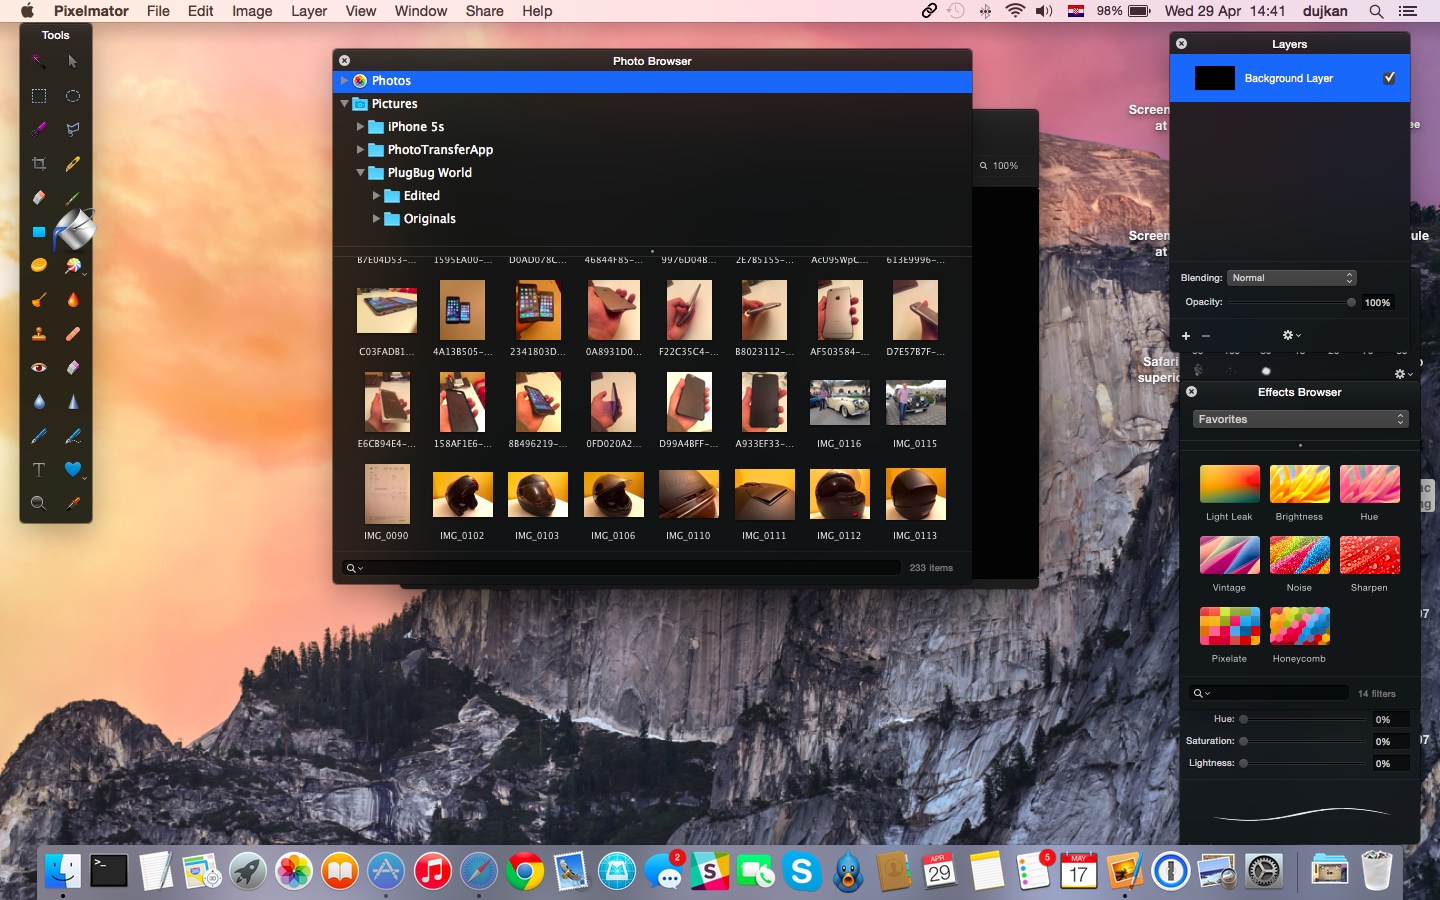 Pixelmator 3.3.2 for Mac Photos app support